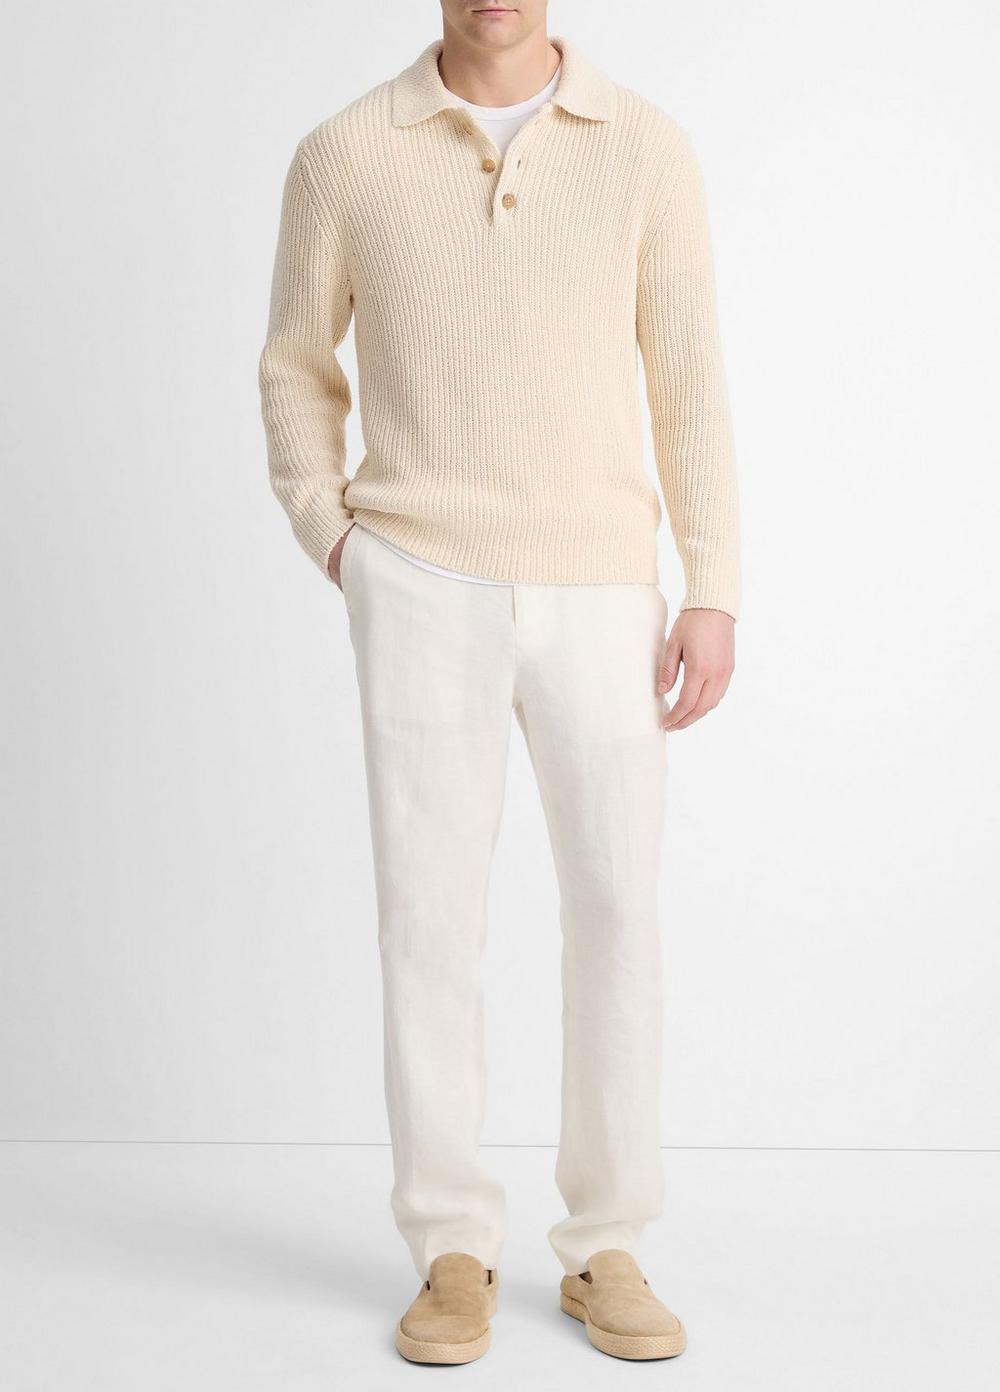 Italian Cotton-Blend Shaker Polo Sweater, Bone, Size L Vince